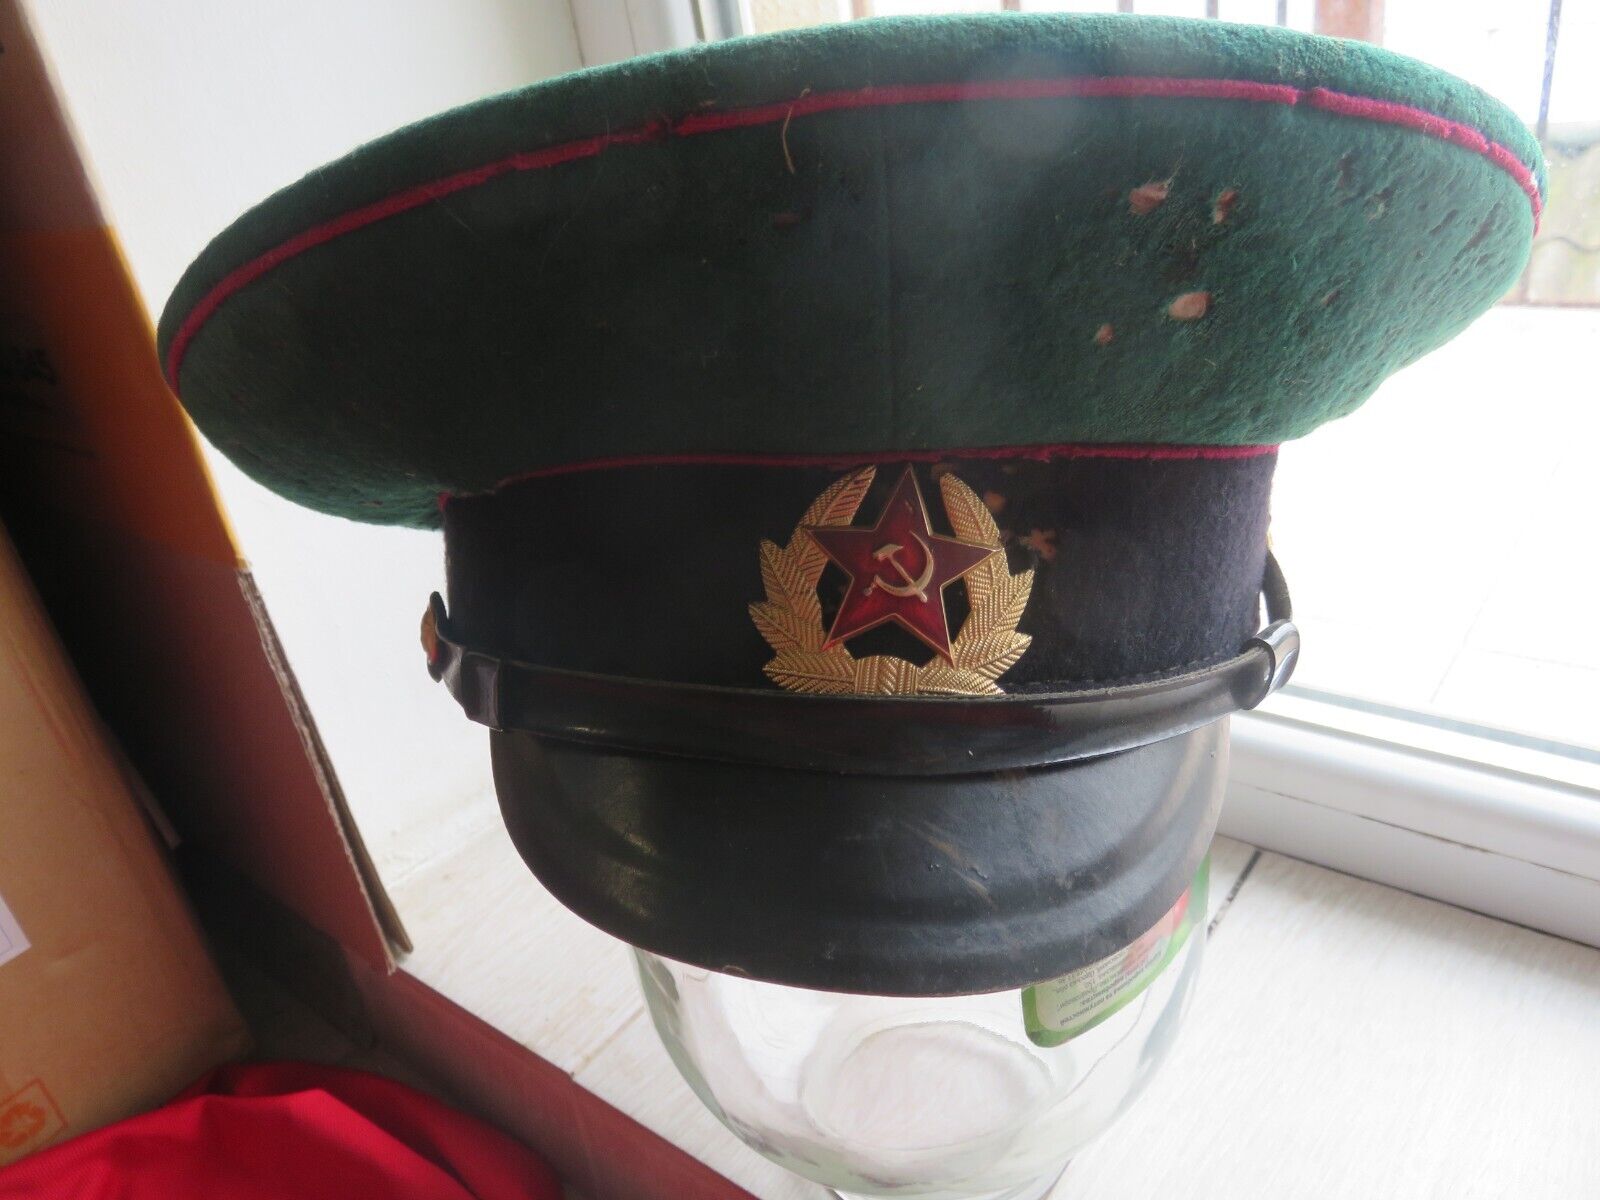 vintage Soviet Union Headdress of the military of the Soviet Army - Peaked cap